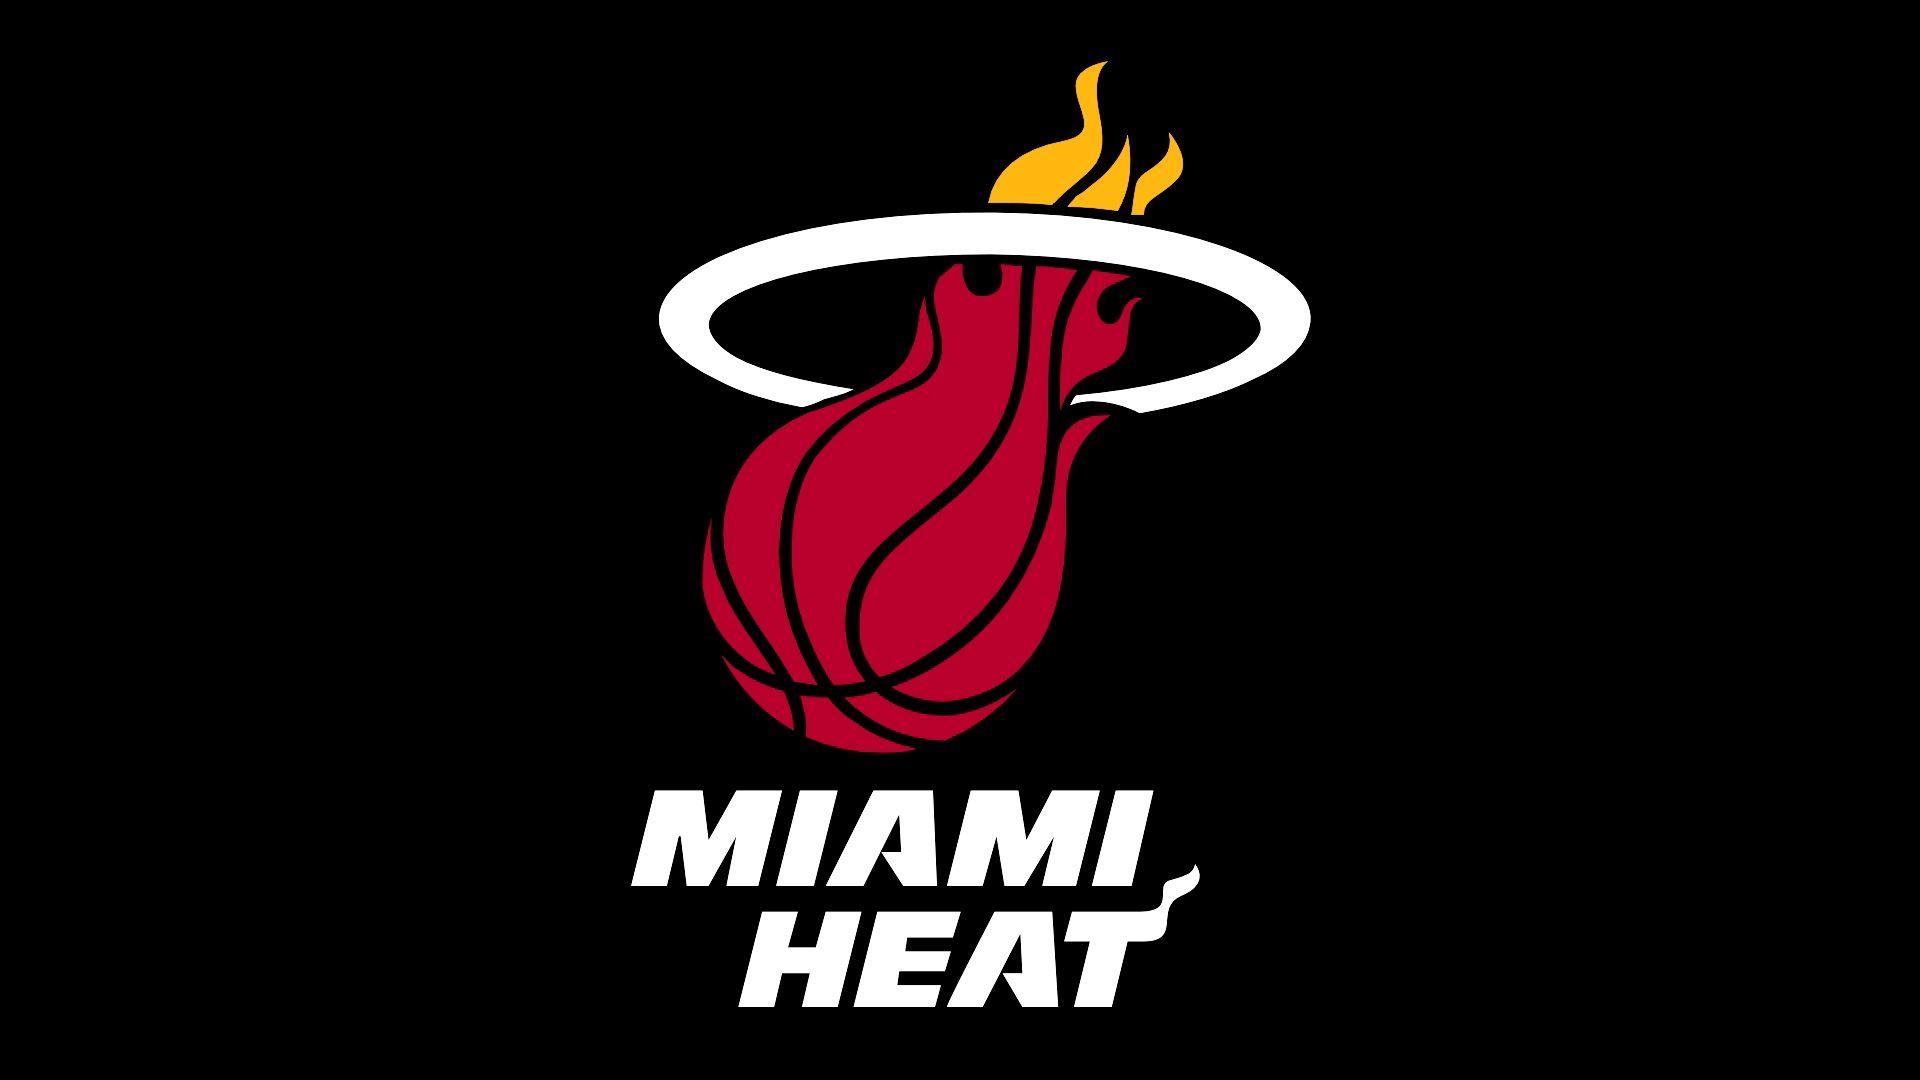 Miami Heat Logo Wallpaper Basketball Team. NBA to Days Basketball